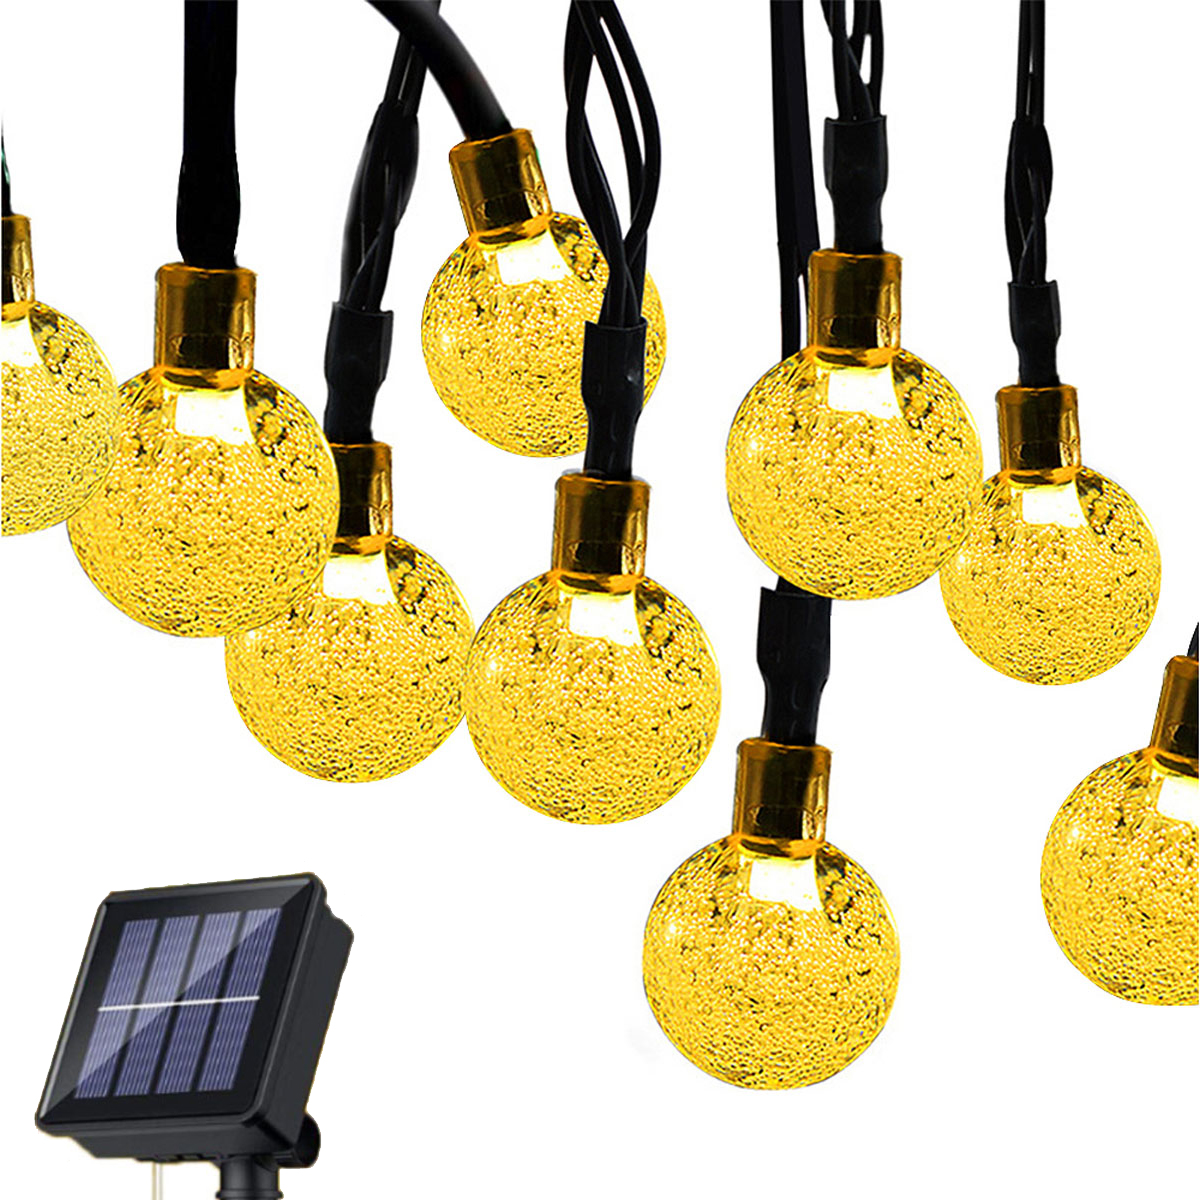 LANOR Solar-Bubble-Ball-Lichterkette,7m Solar-Lichterketten, Ball Lichter warmweiß,für Licht, 50 Bubble Warmweiß Garten